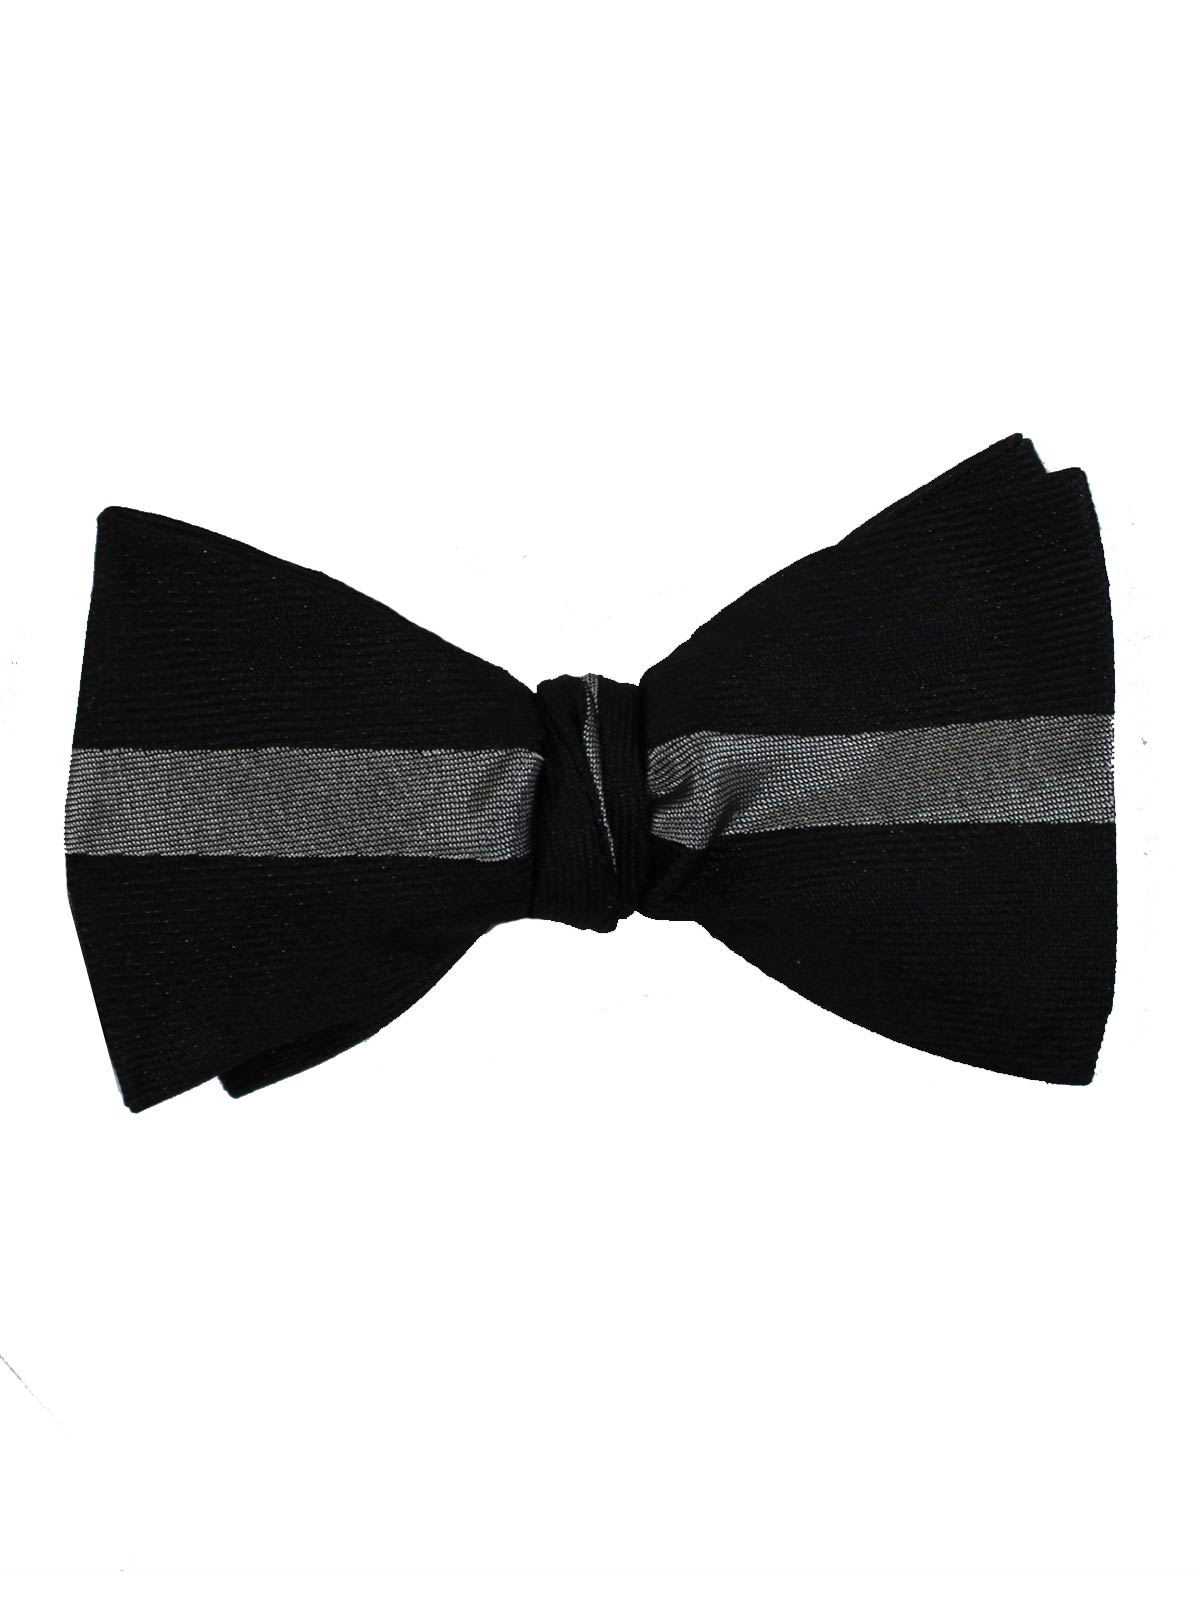 Gene Meyer Bow Tie Black Gray Stripe - Hand Made In Italy